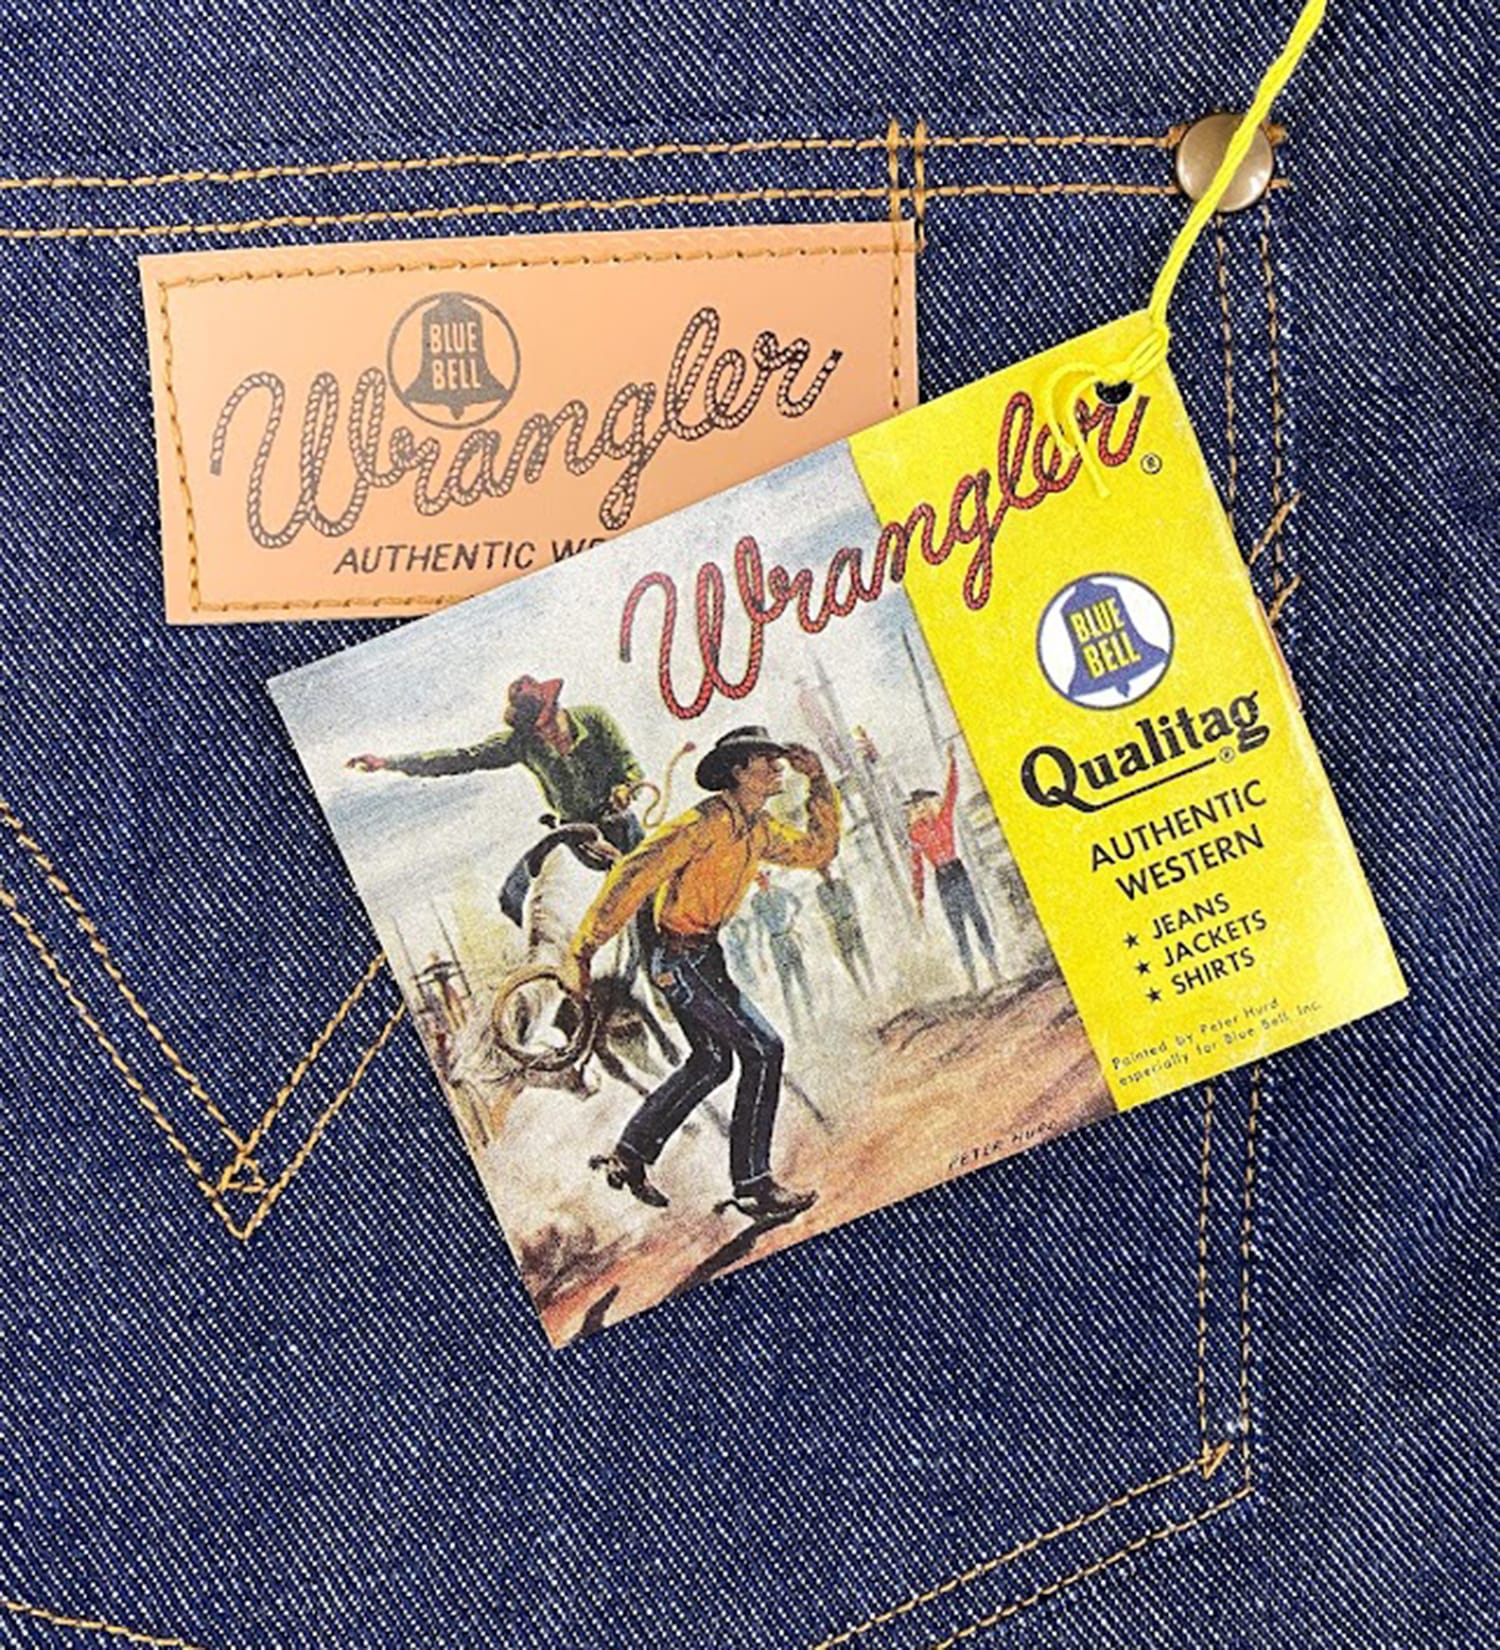 Wrangler(ラングラー)の【試着対象】ARCHIVE 11MW 1951MODEL デニムパンツ|パンツ/デニムパンツ/メンズ|インディゴ未洗い